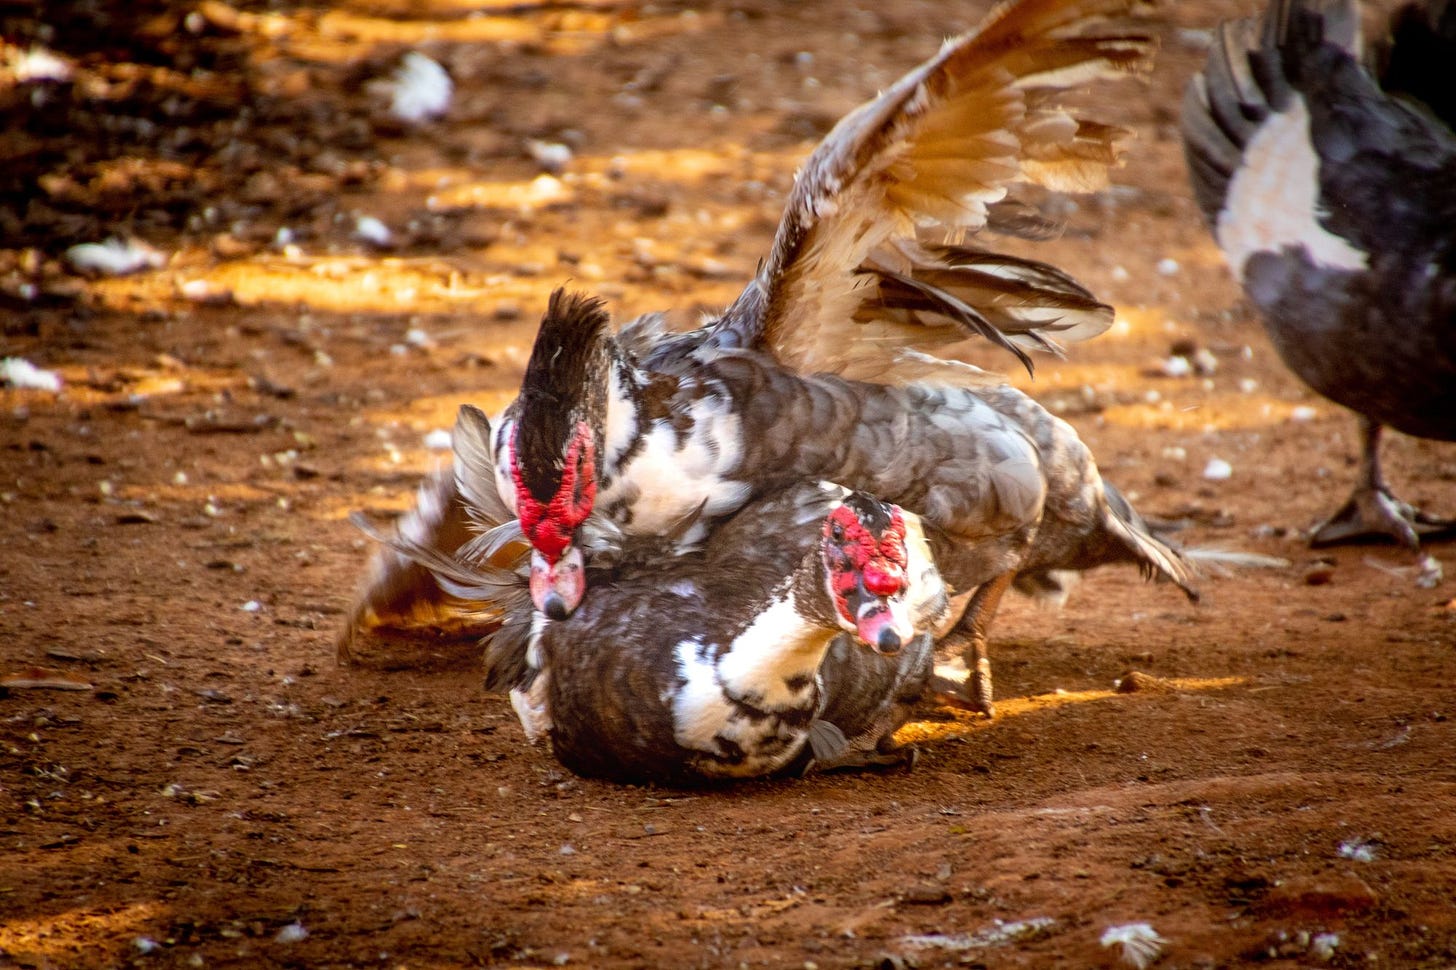 two ducks fighting in the dirt photo via pexels